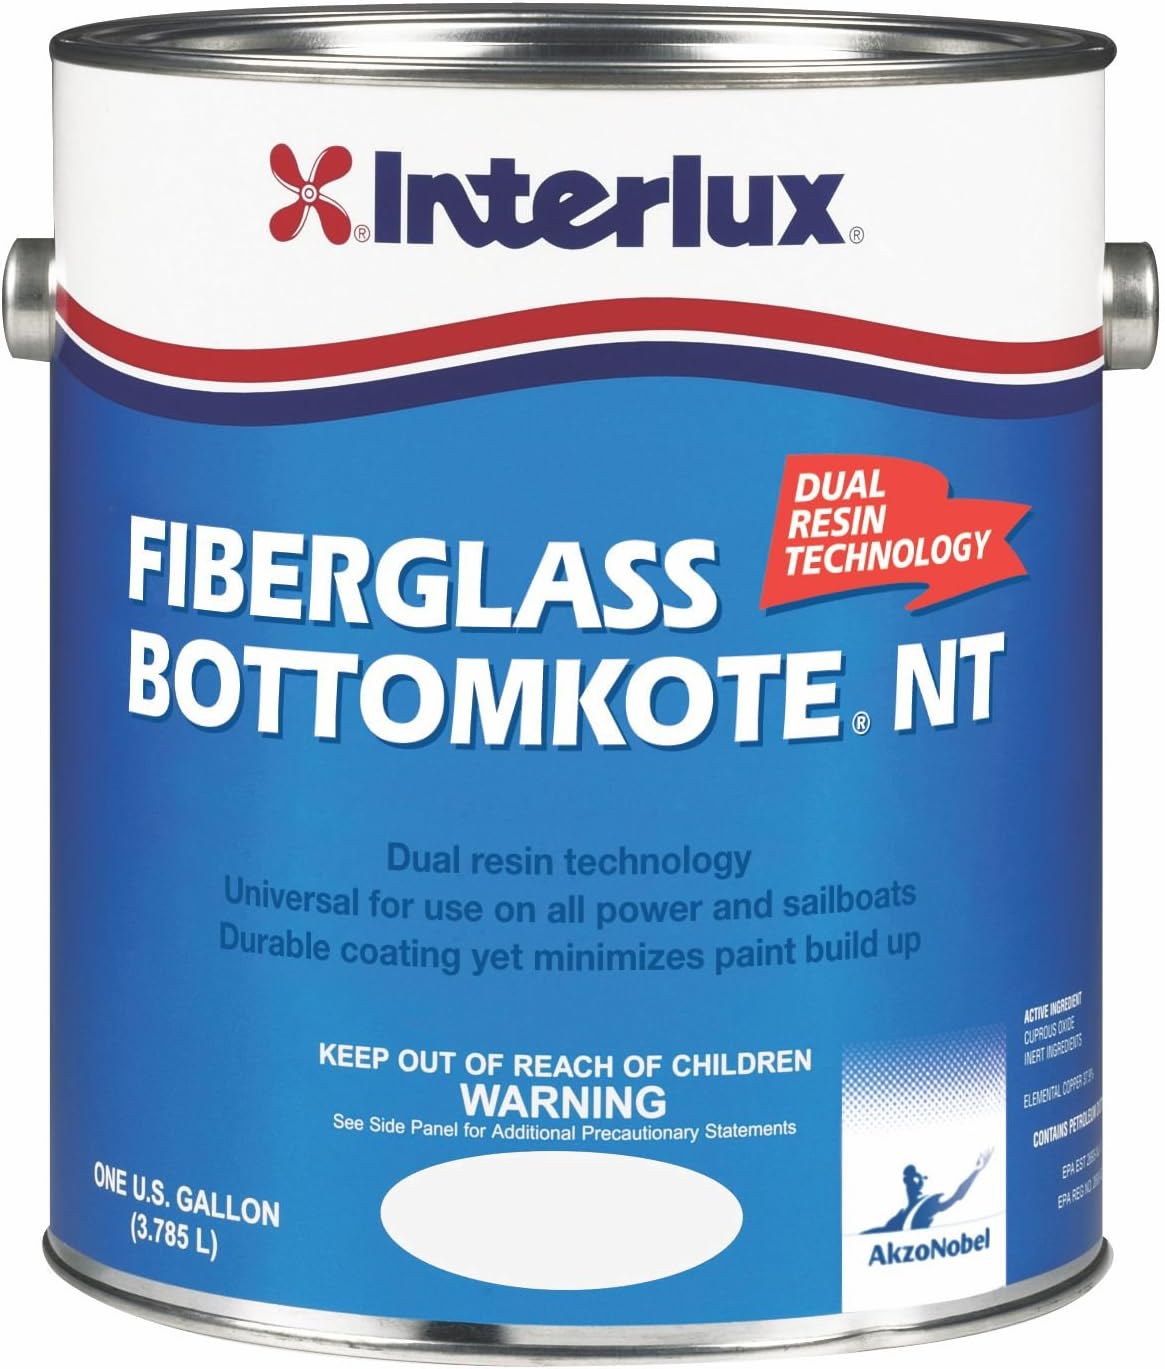 INTERLUX - Fiberglass Bottomkote NT, Paint For [...]